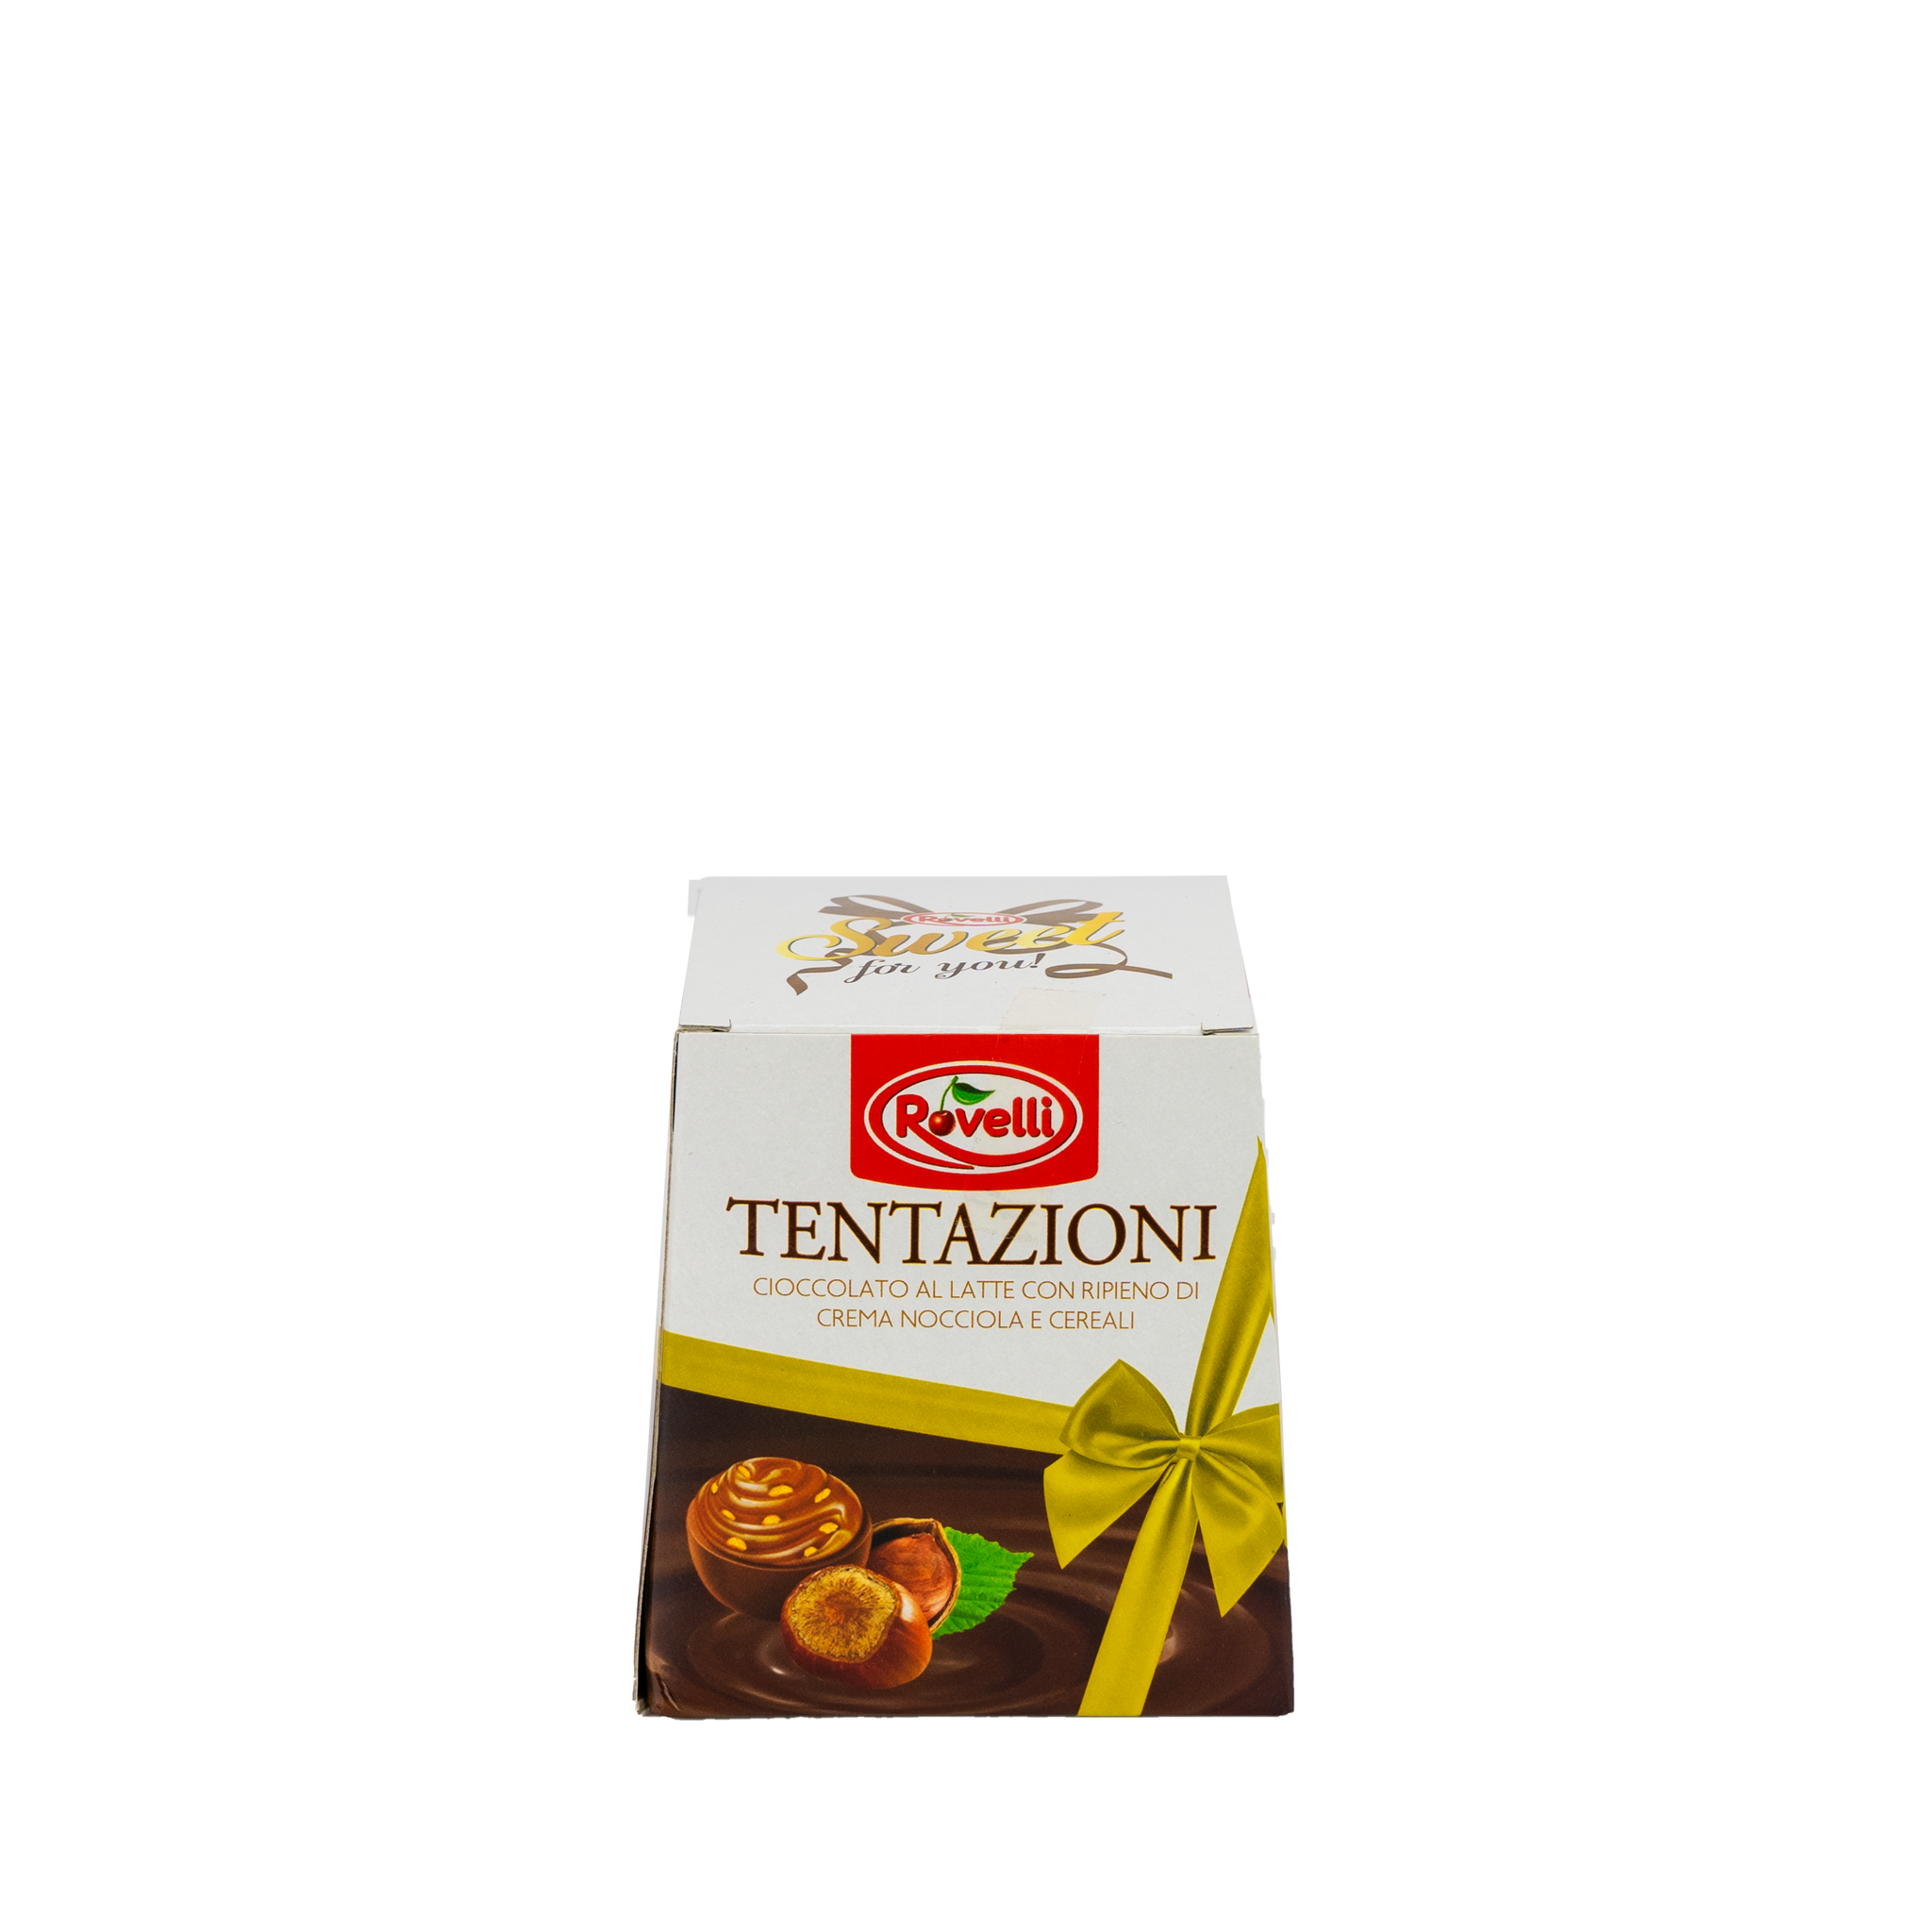 Sweet Tenatzioni Rovelli with Hazelnut Cream